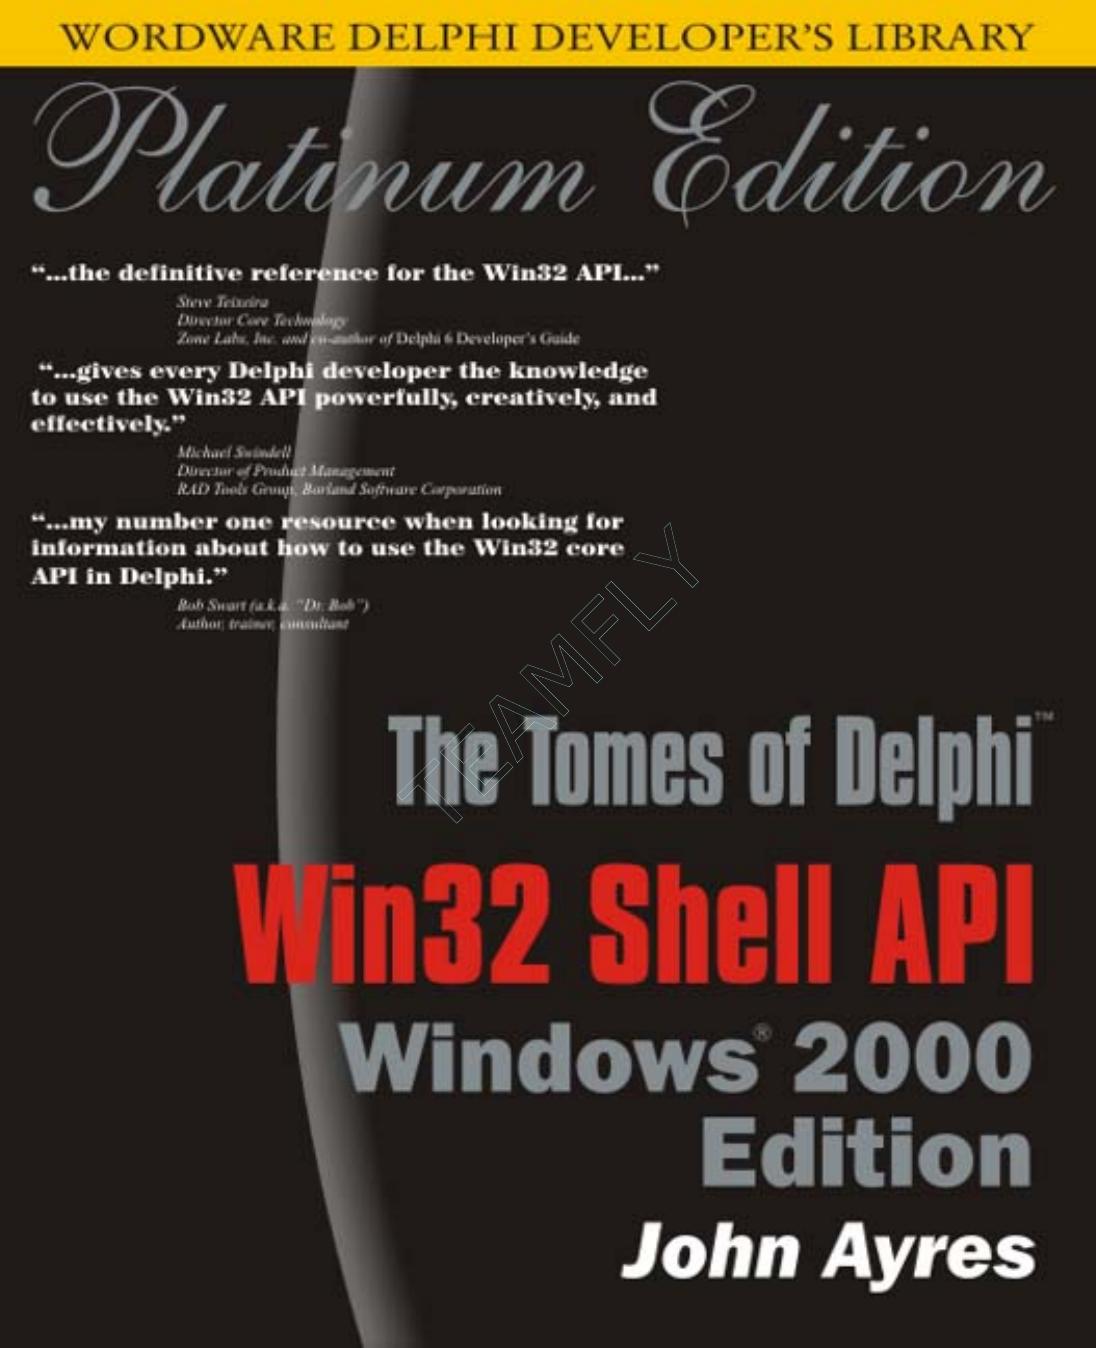 Tomes of Delphi: Win 32 Shell API Windows 2000 Edition